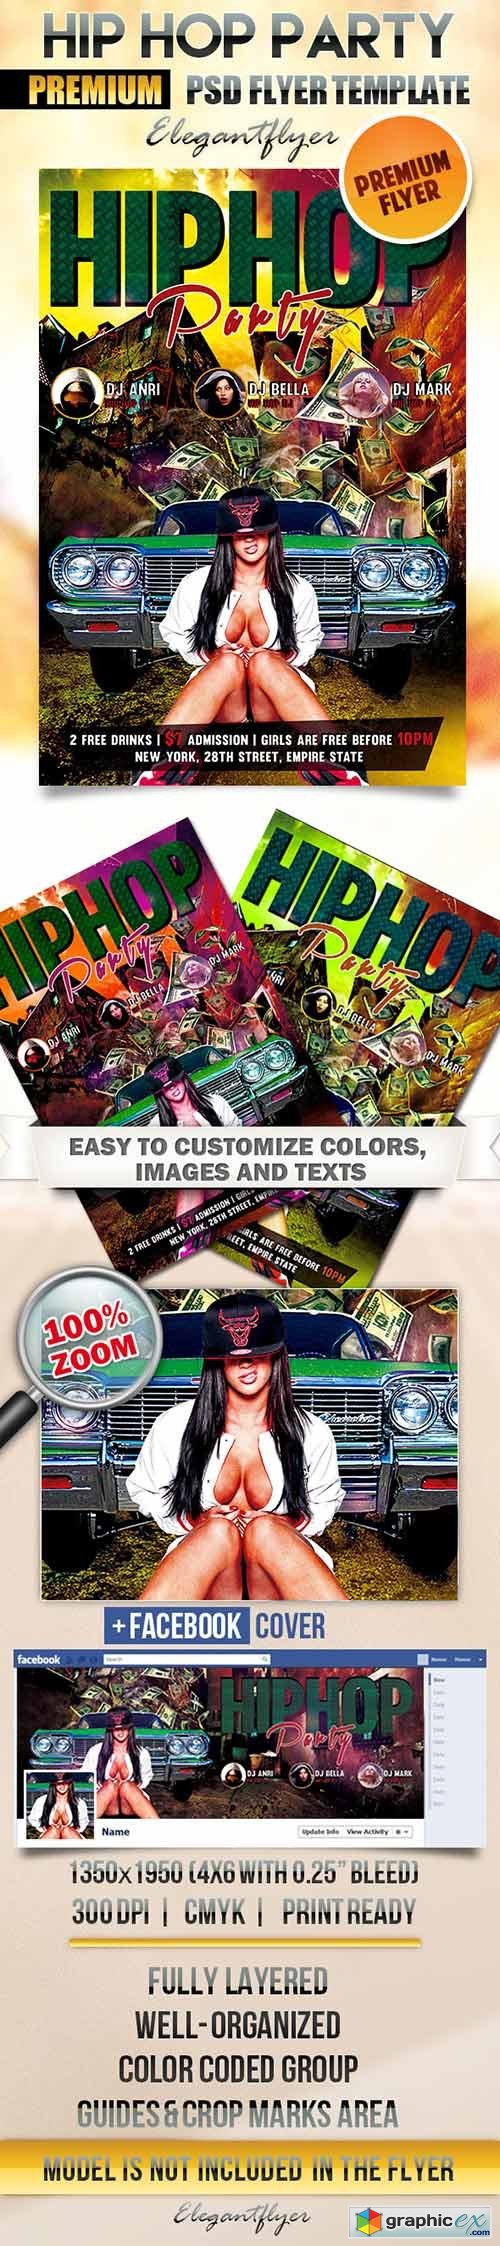 Hip Hop Party Flyer PSD Template + Facebook Cover